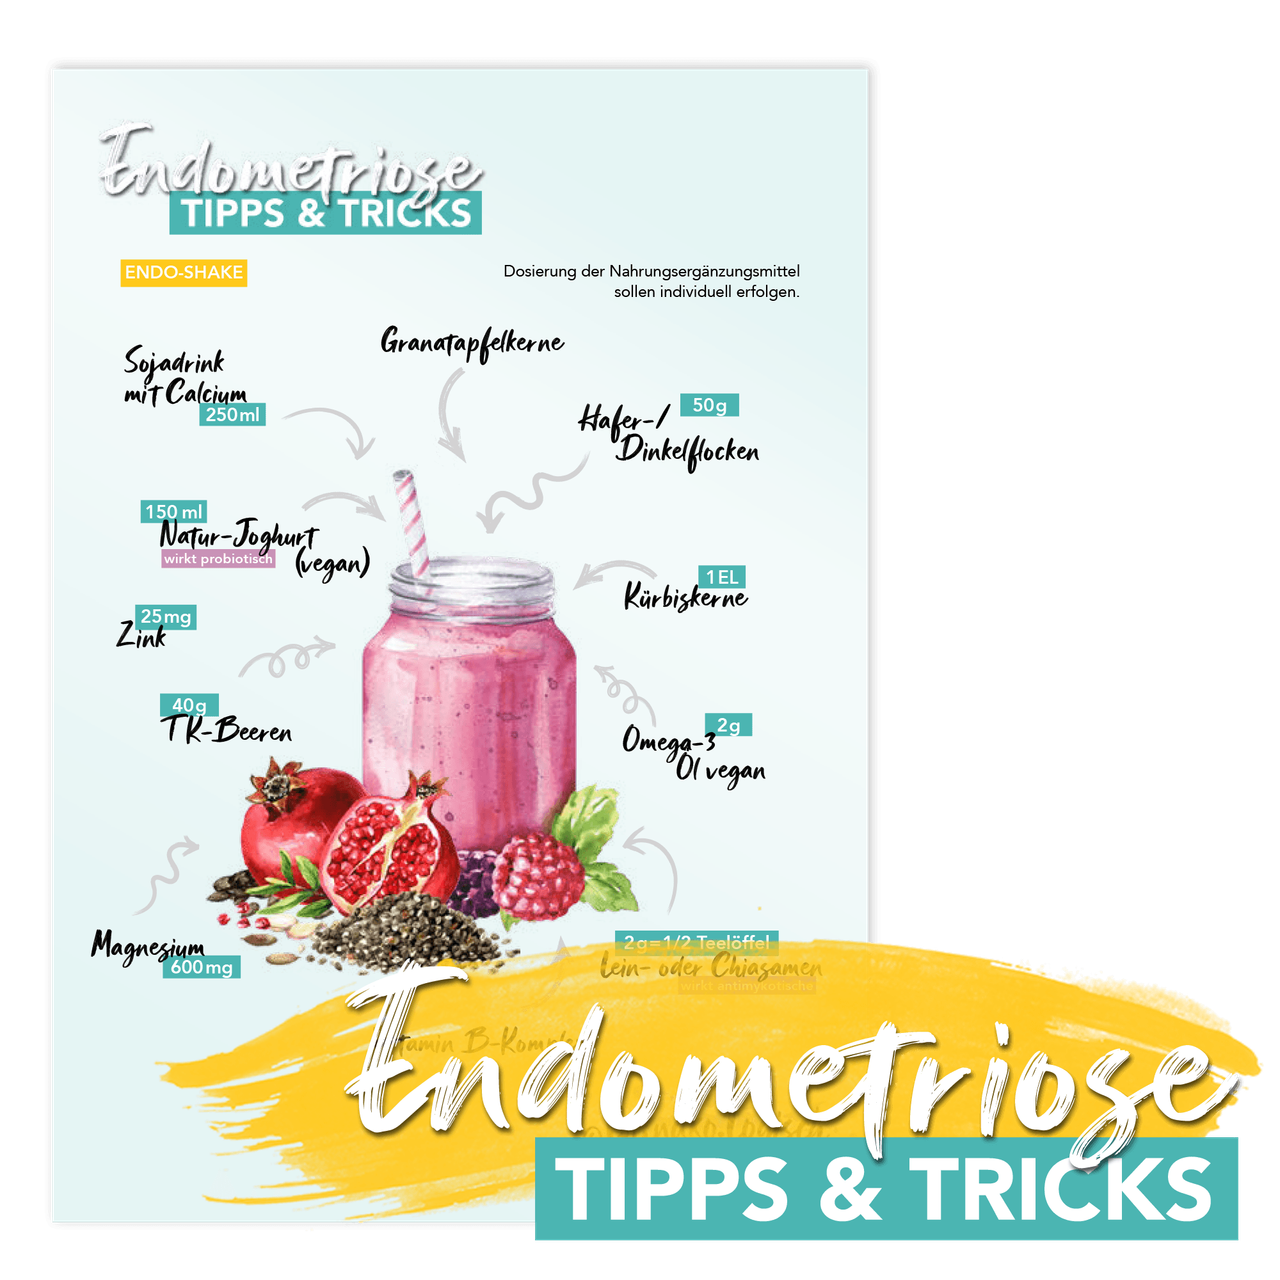 medium_Endometriose_Tipps_and_Tricks_d50bf57383.png